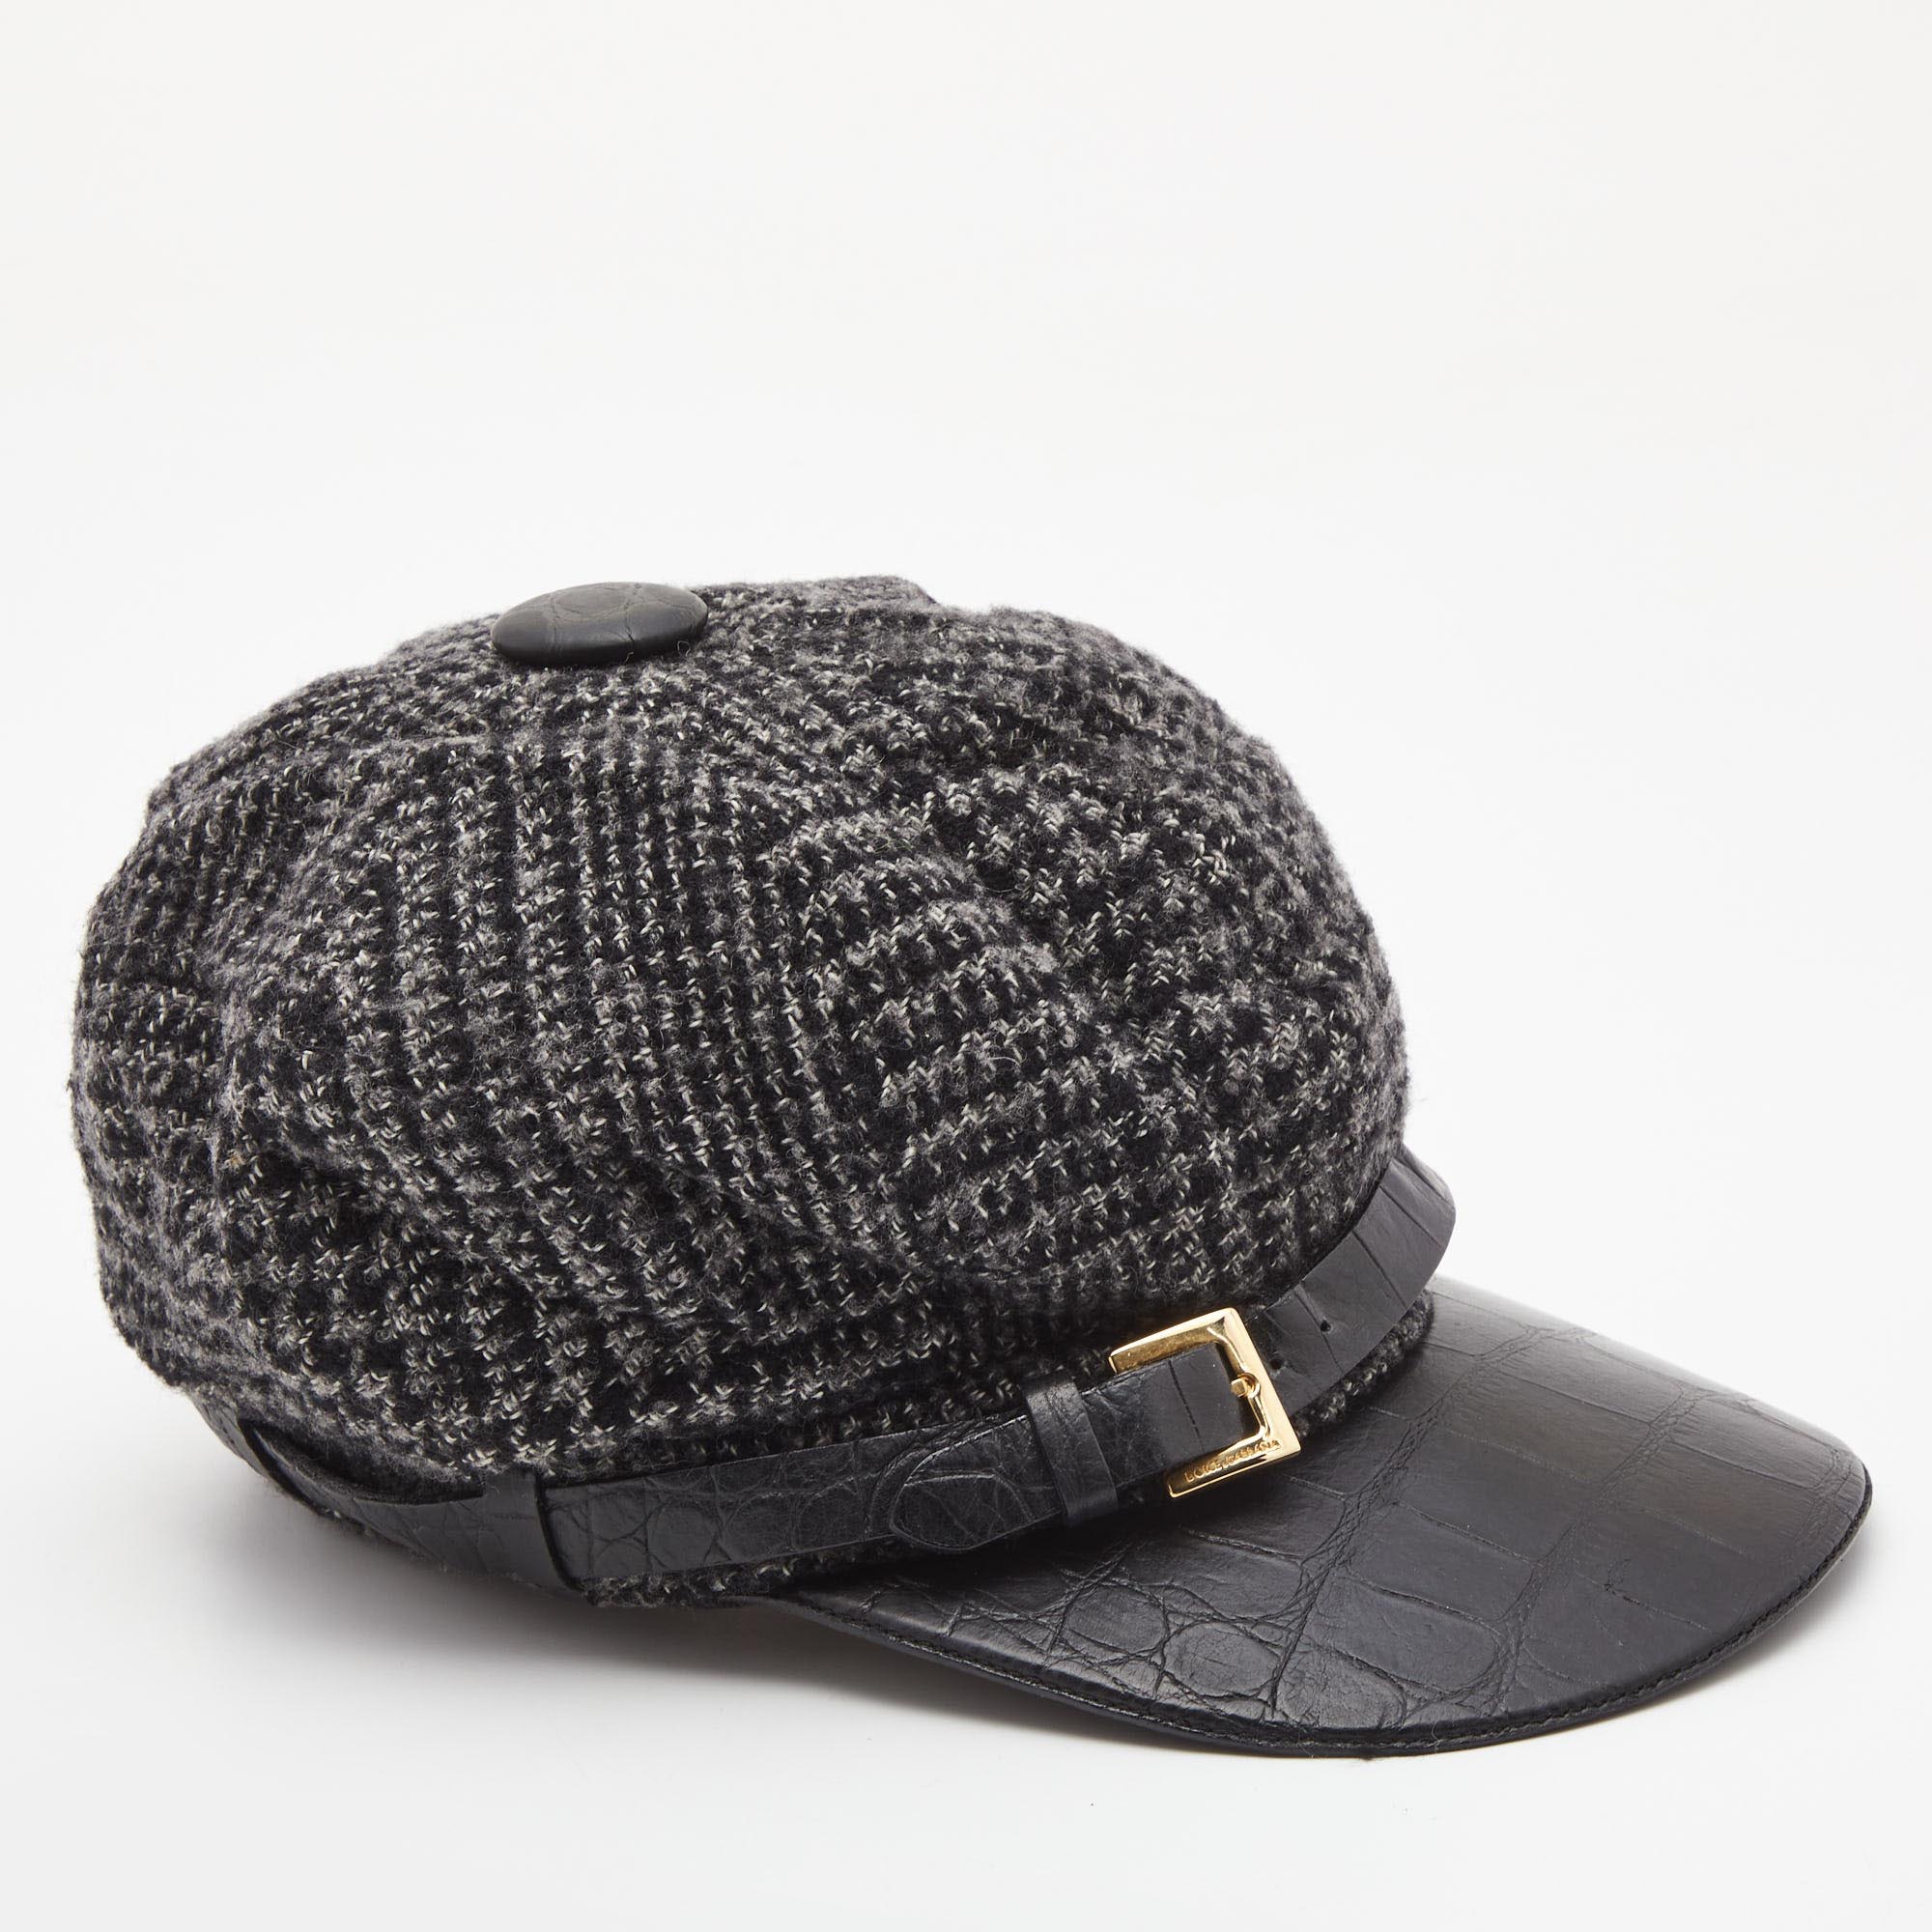 

Dolce & Gabbana Black Wool Knit Croc Embossed Leather Baseball Cap Size